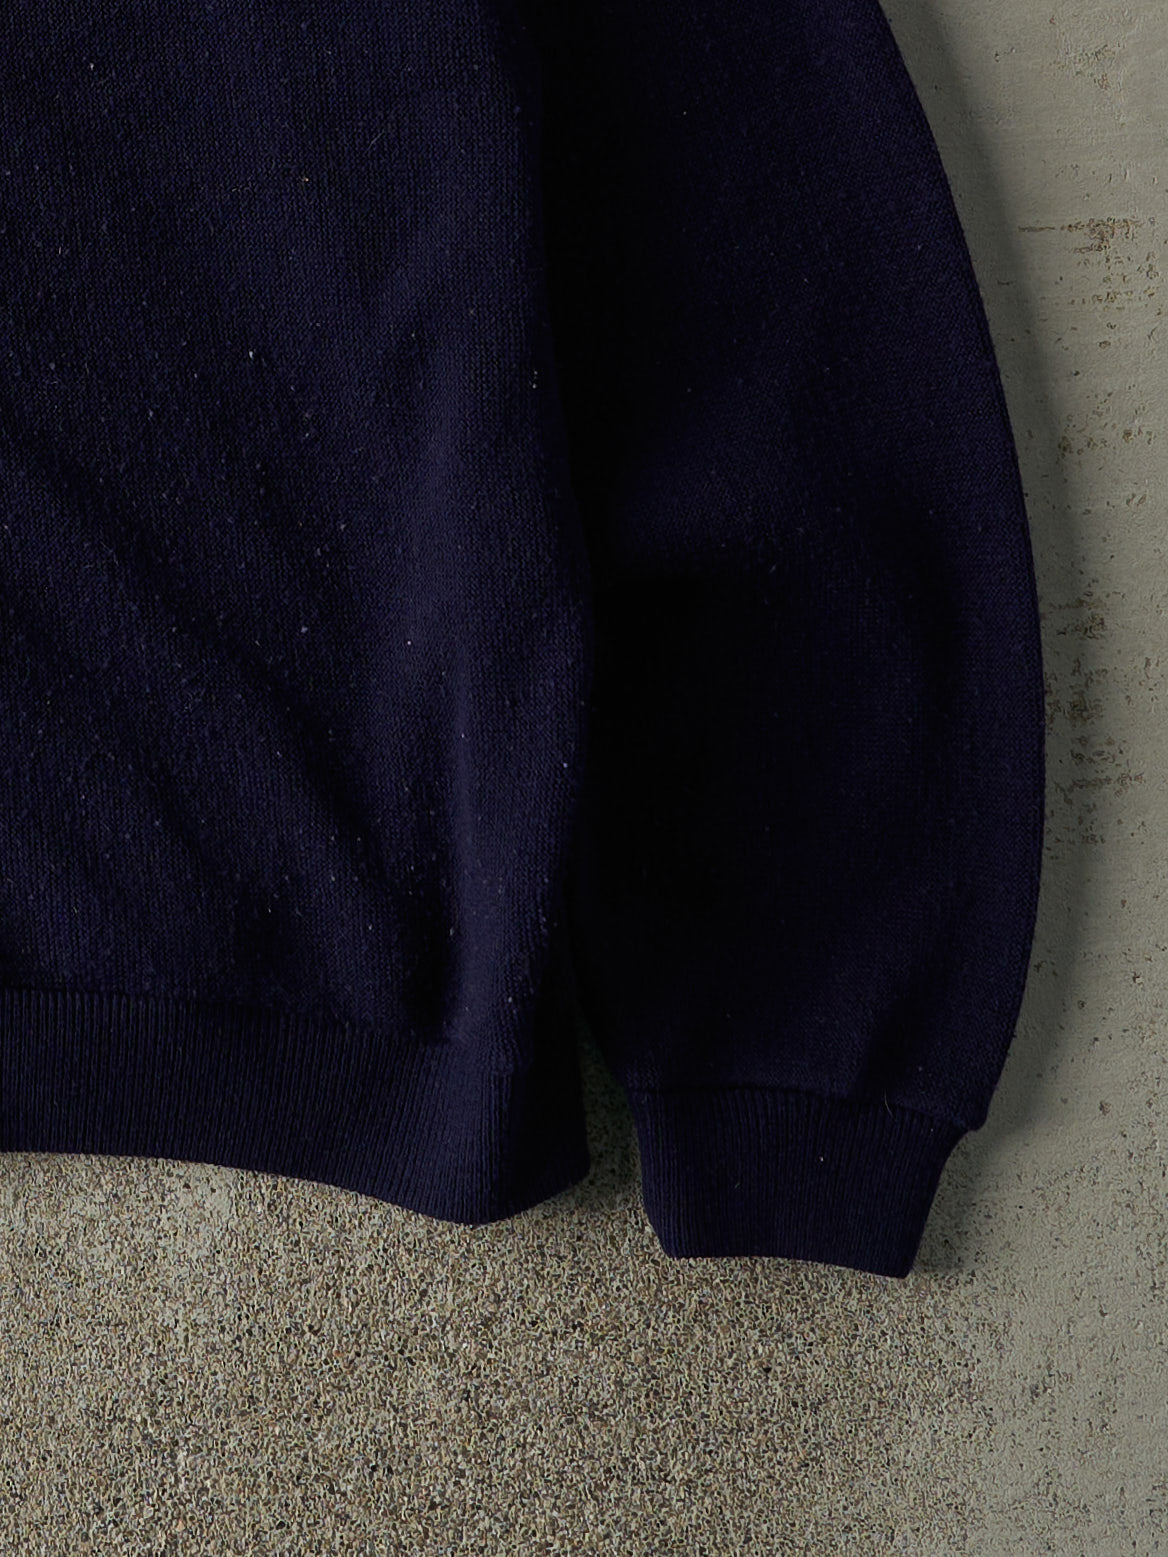 Vintage 80s Navy Blue Knit Cardigan (M)